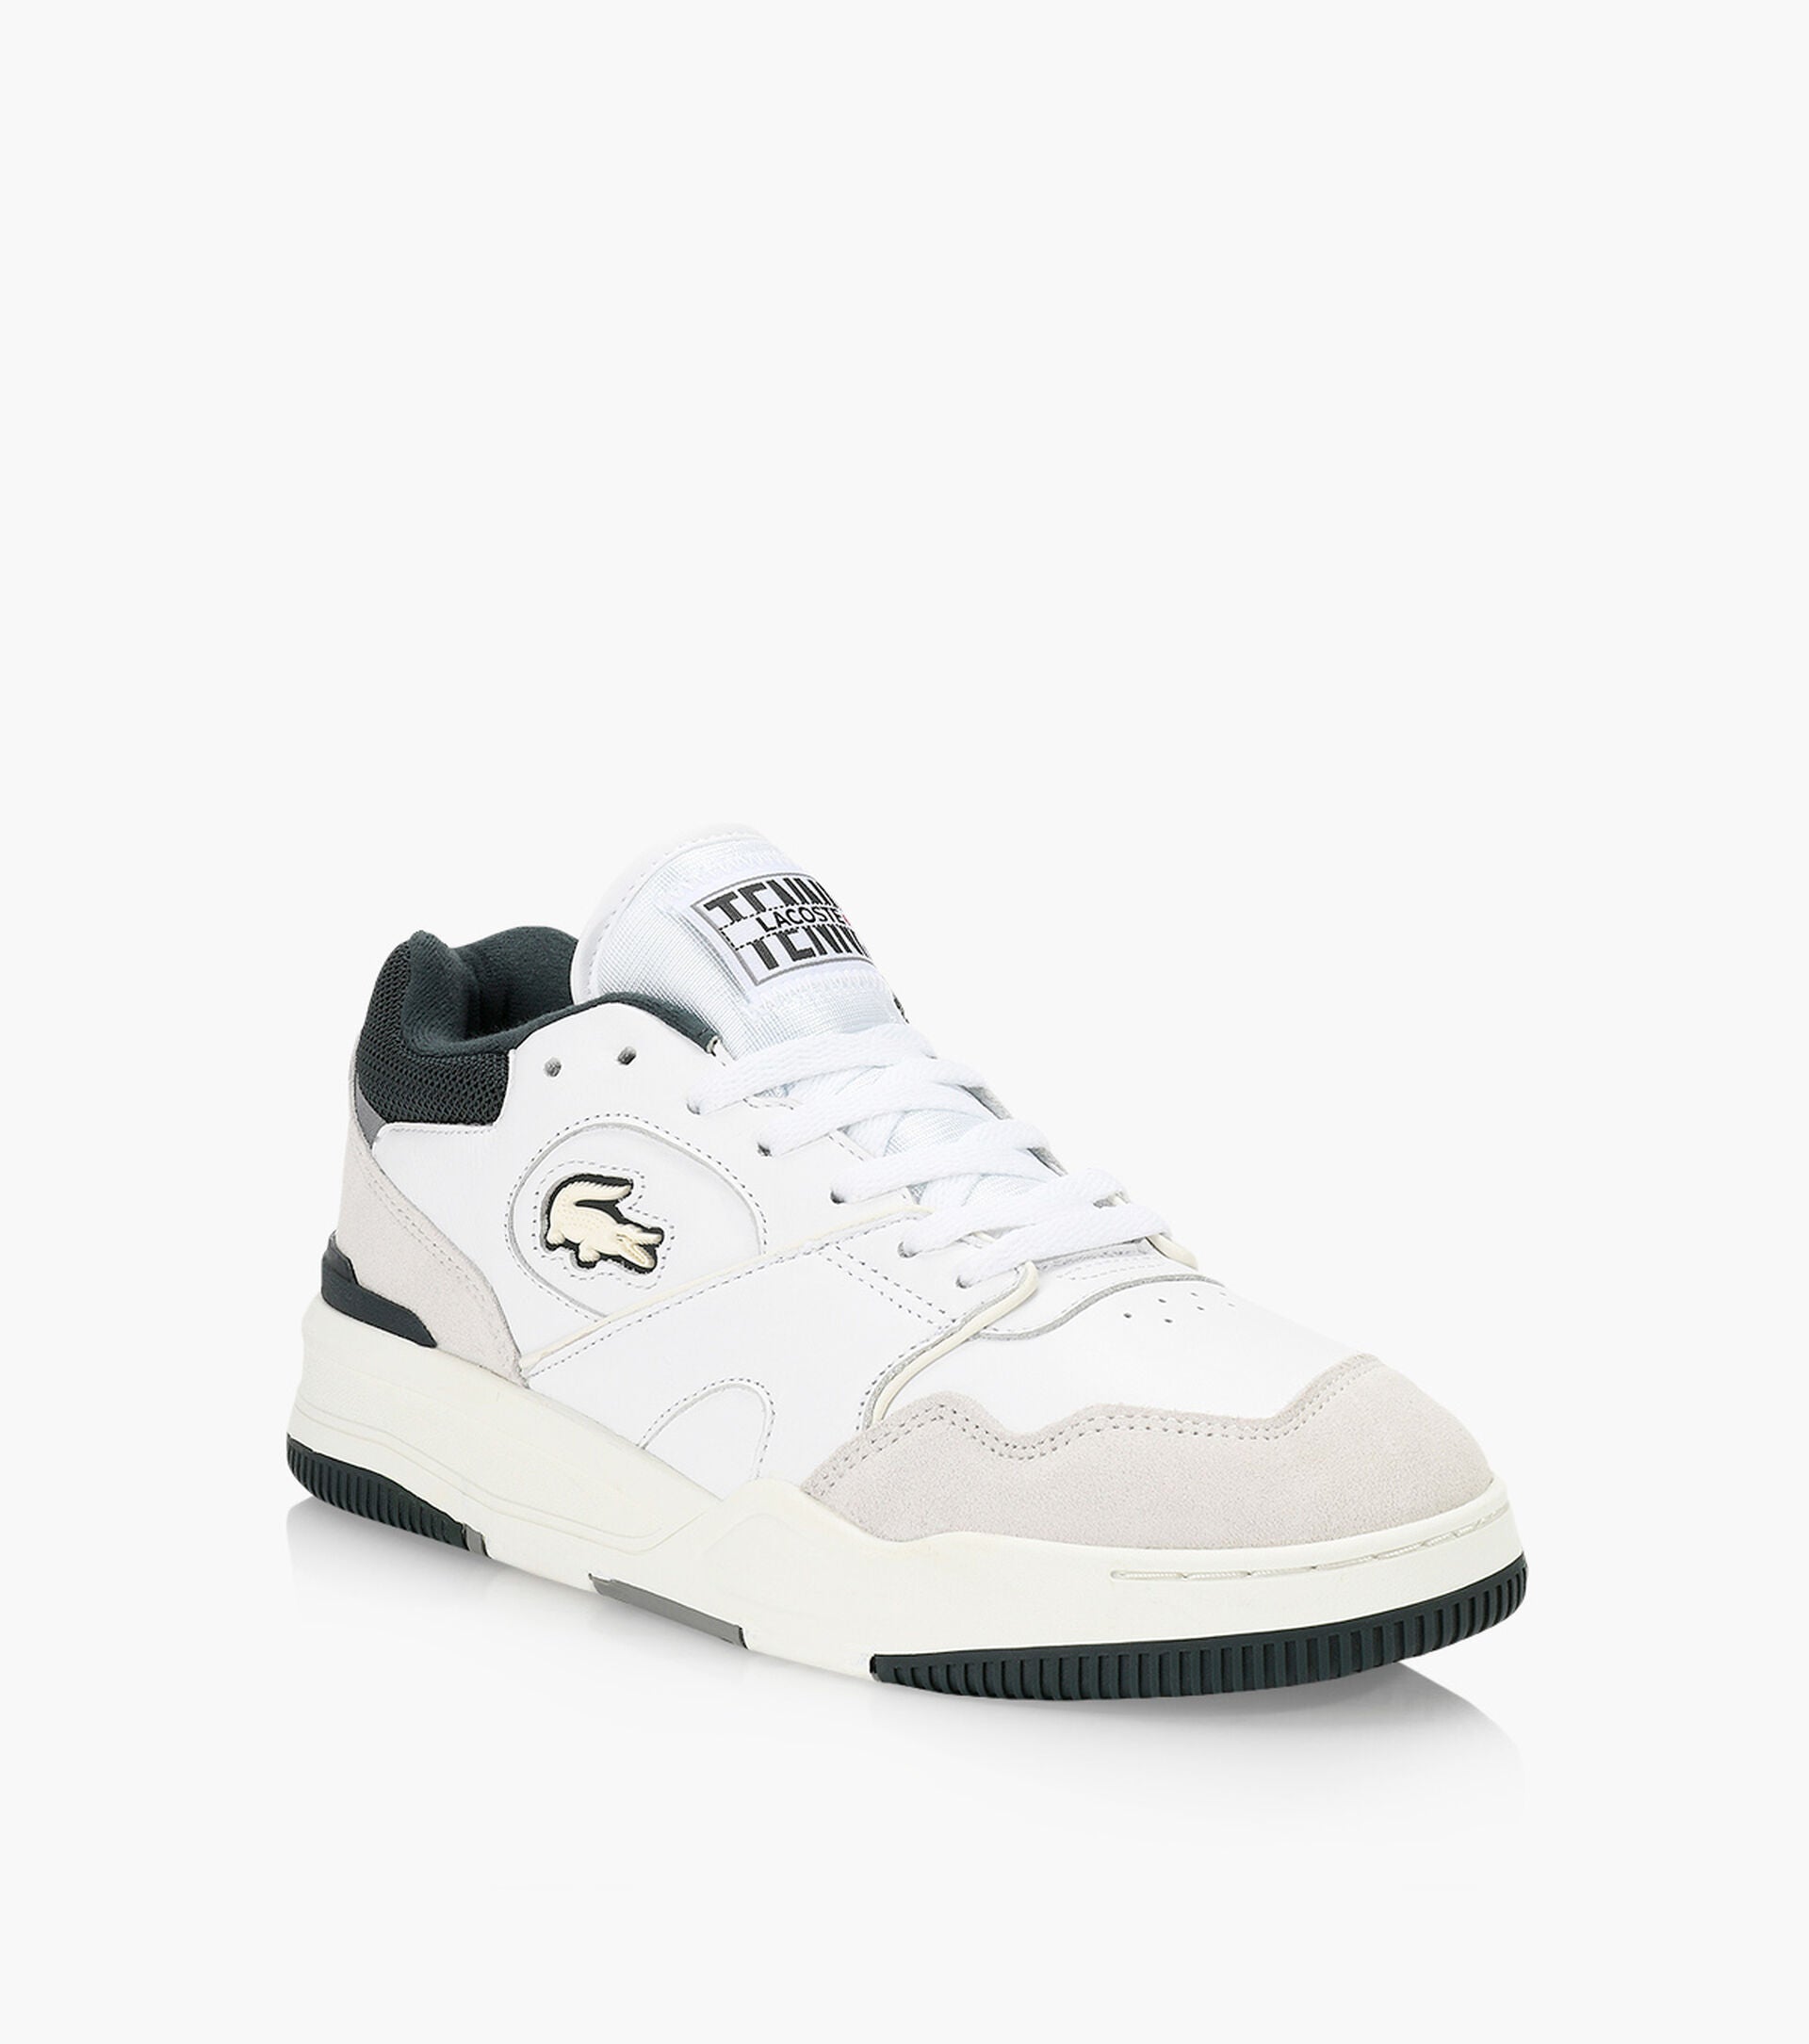 Lineshot Sneakers Leather White/Dark Green